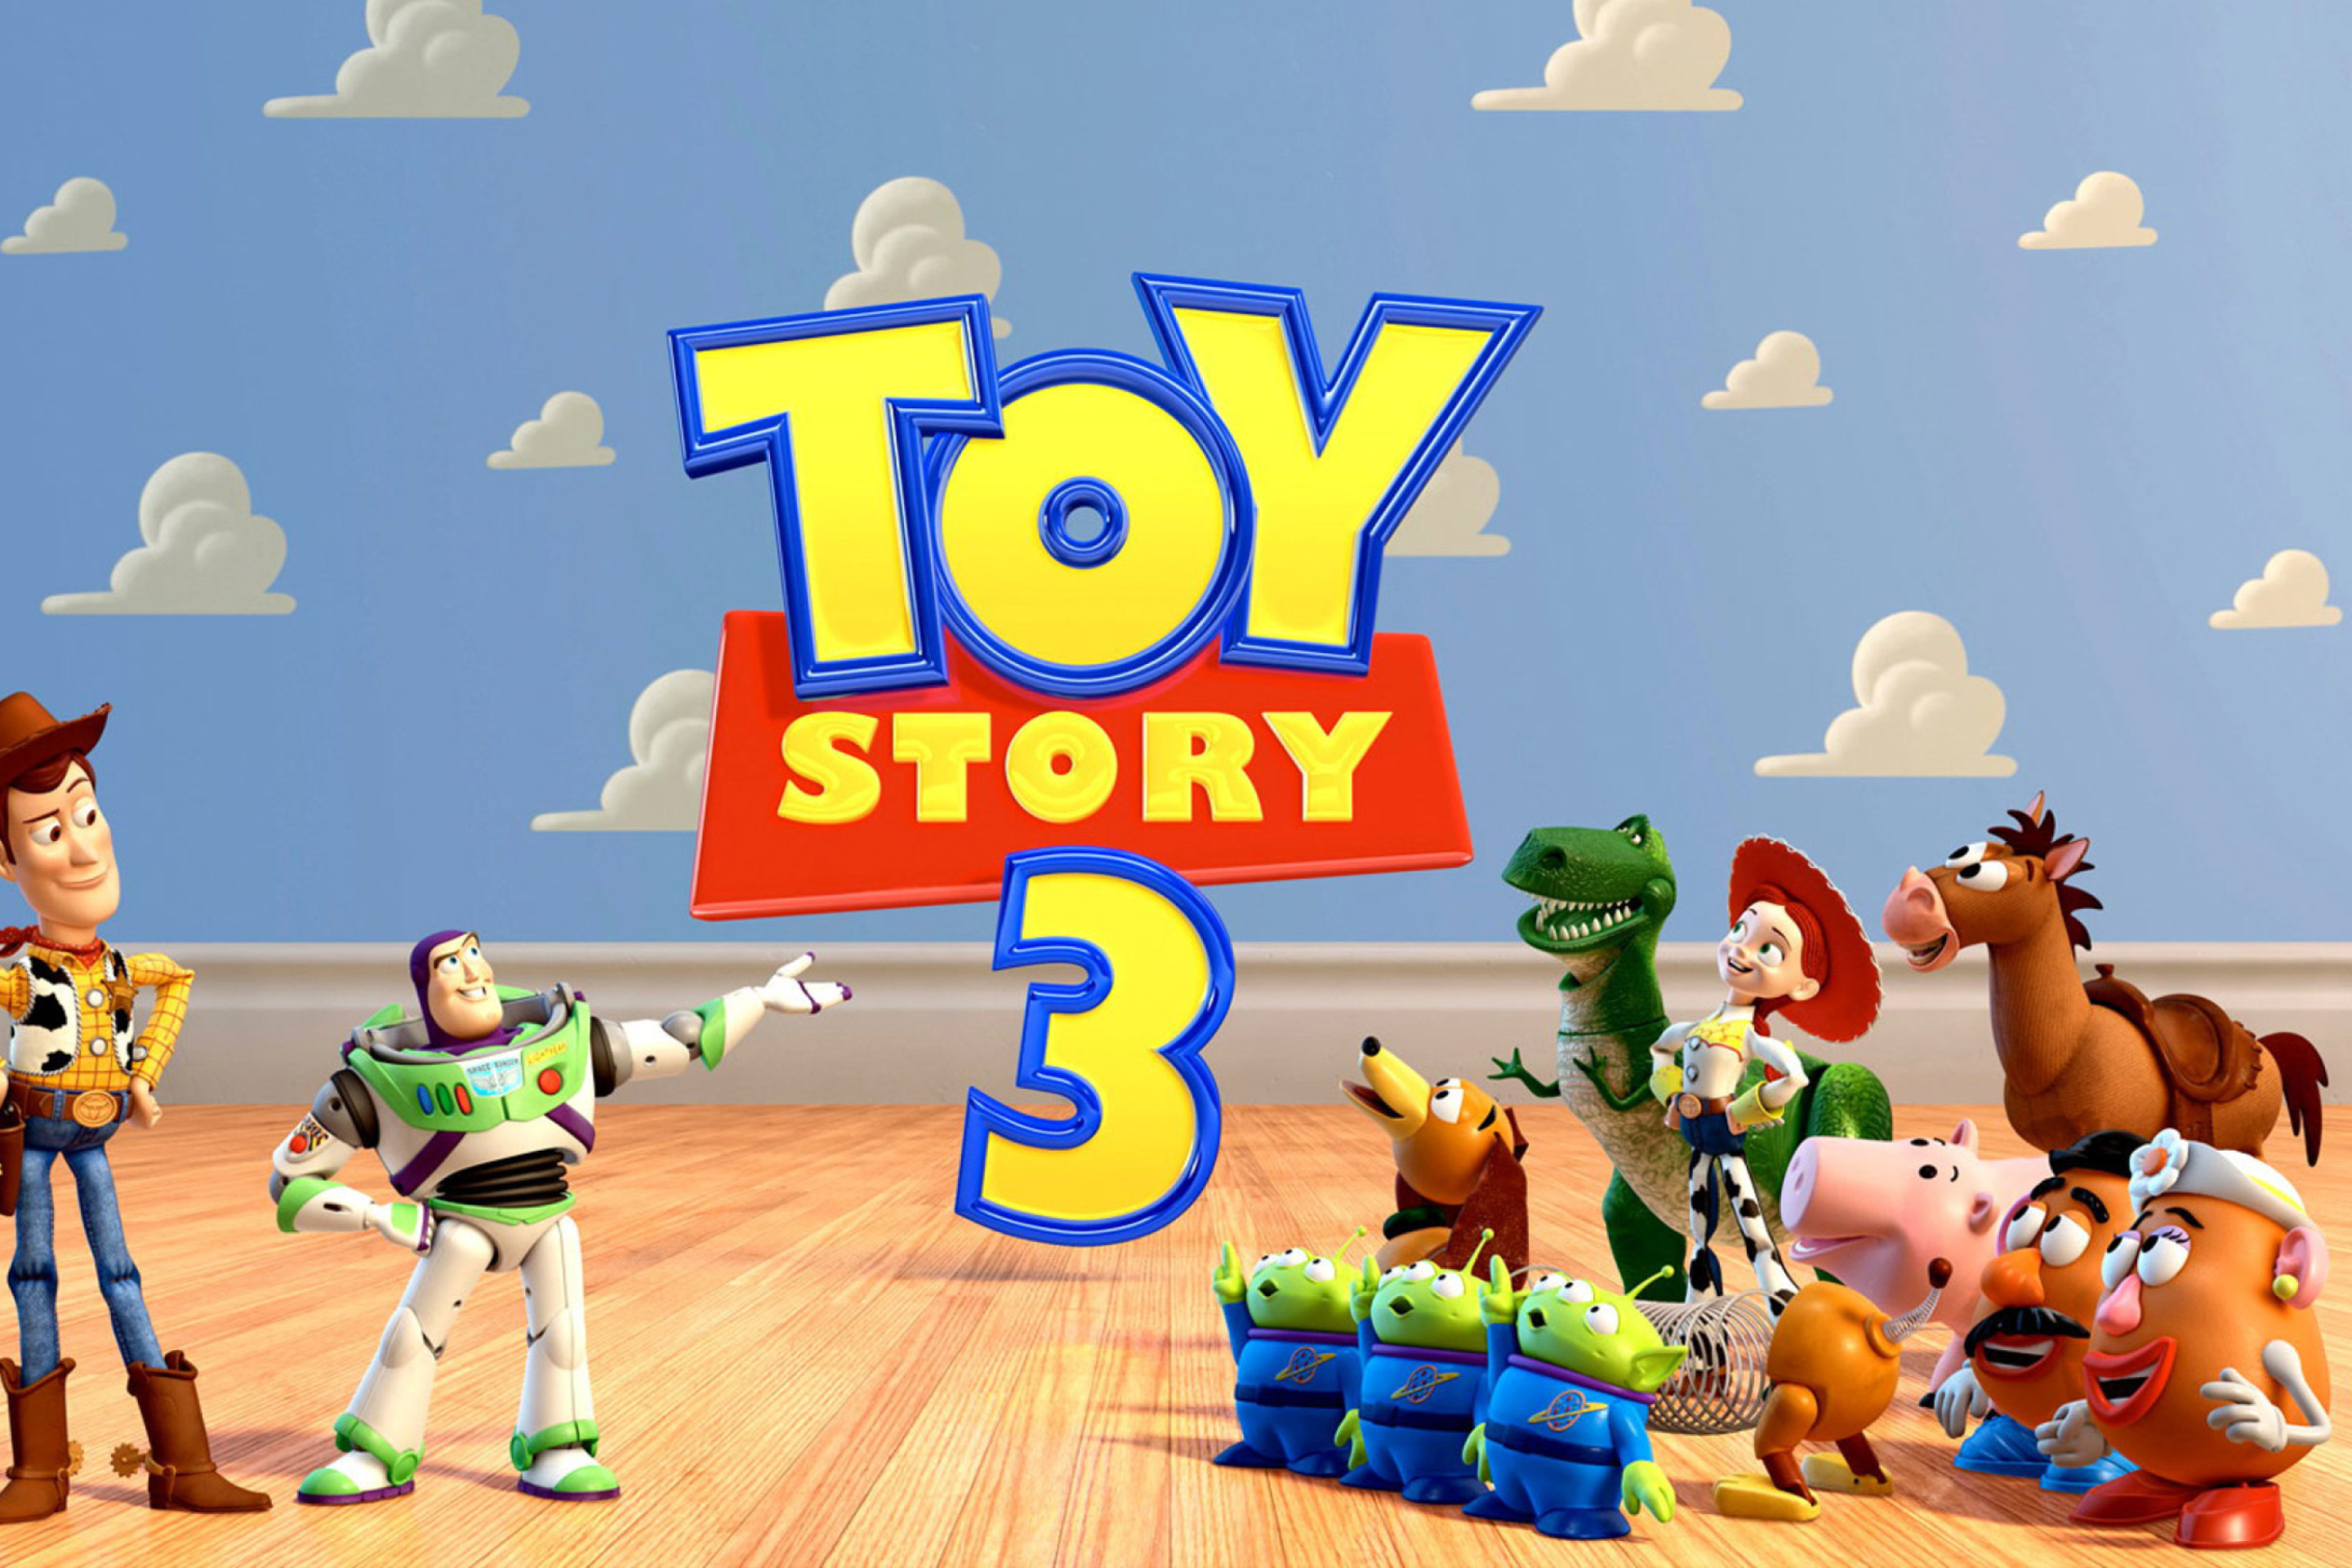 Adventure story 3. История игрушек: большой побег / Toy story 3. Toy story 3 игра. Toy story игра 1995. Toy story 3 постеры.